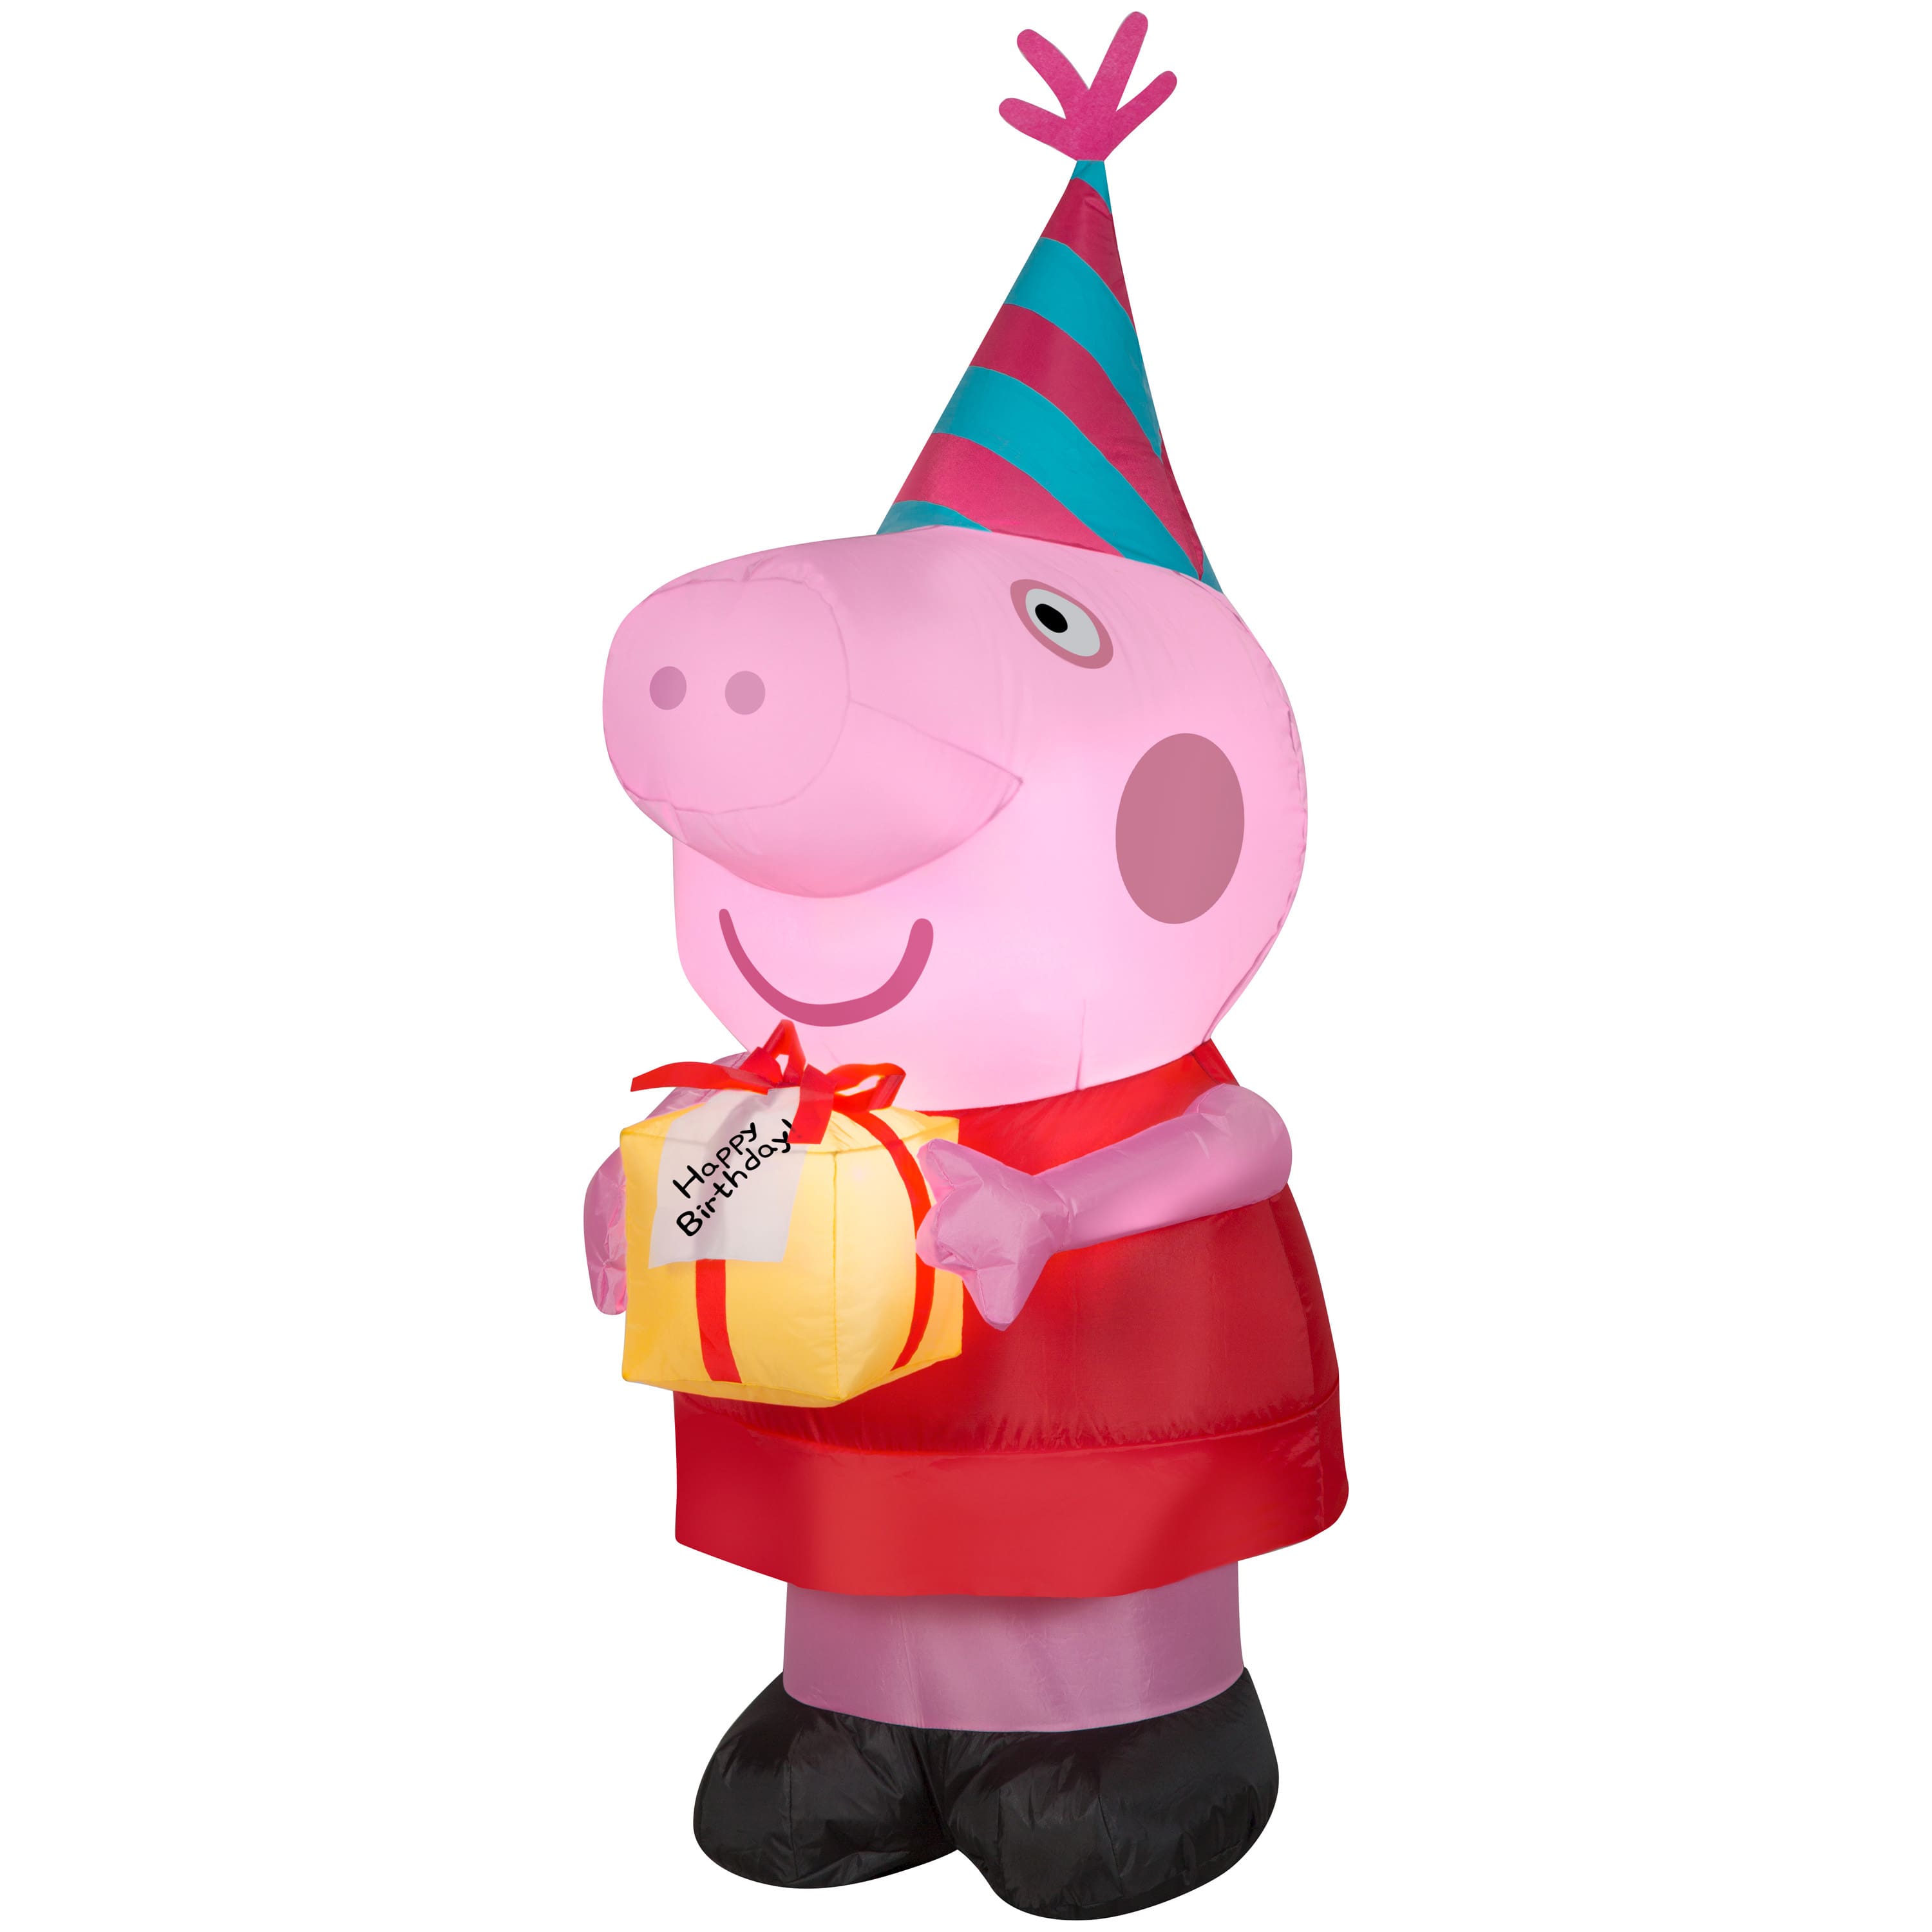 Bolsa casinha peppa pig  Peppa pig party, Peppa pig birthday party, Peppa  pig birthday